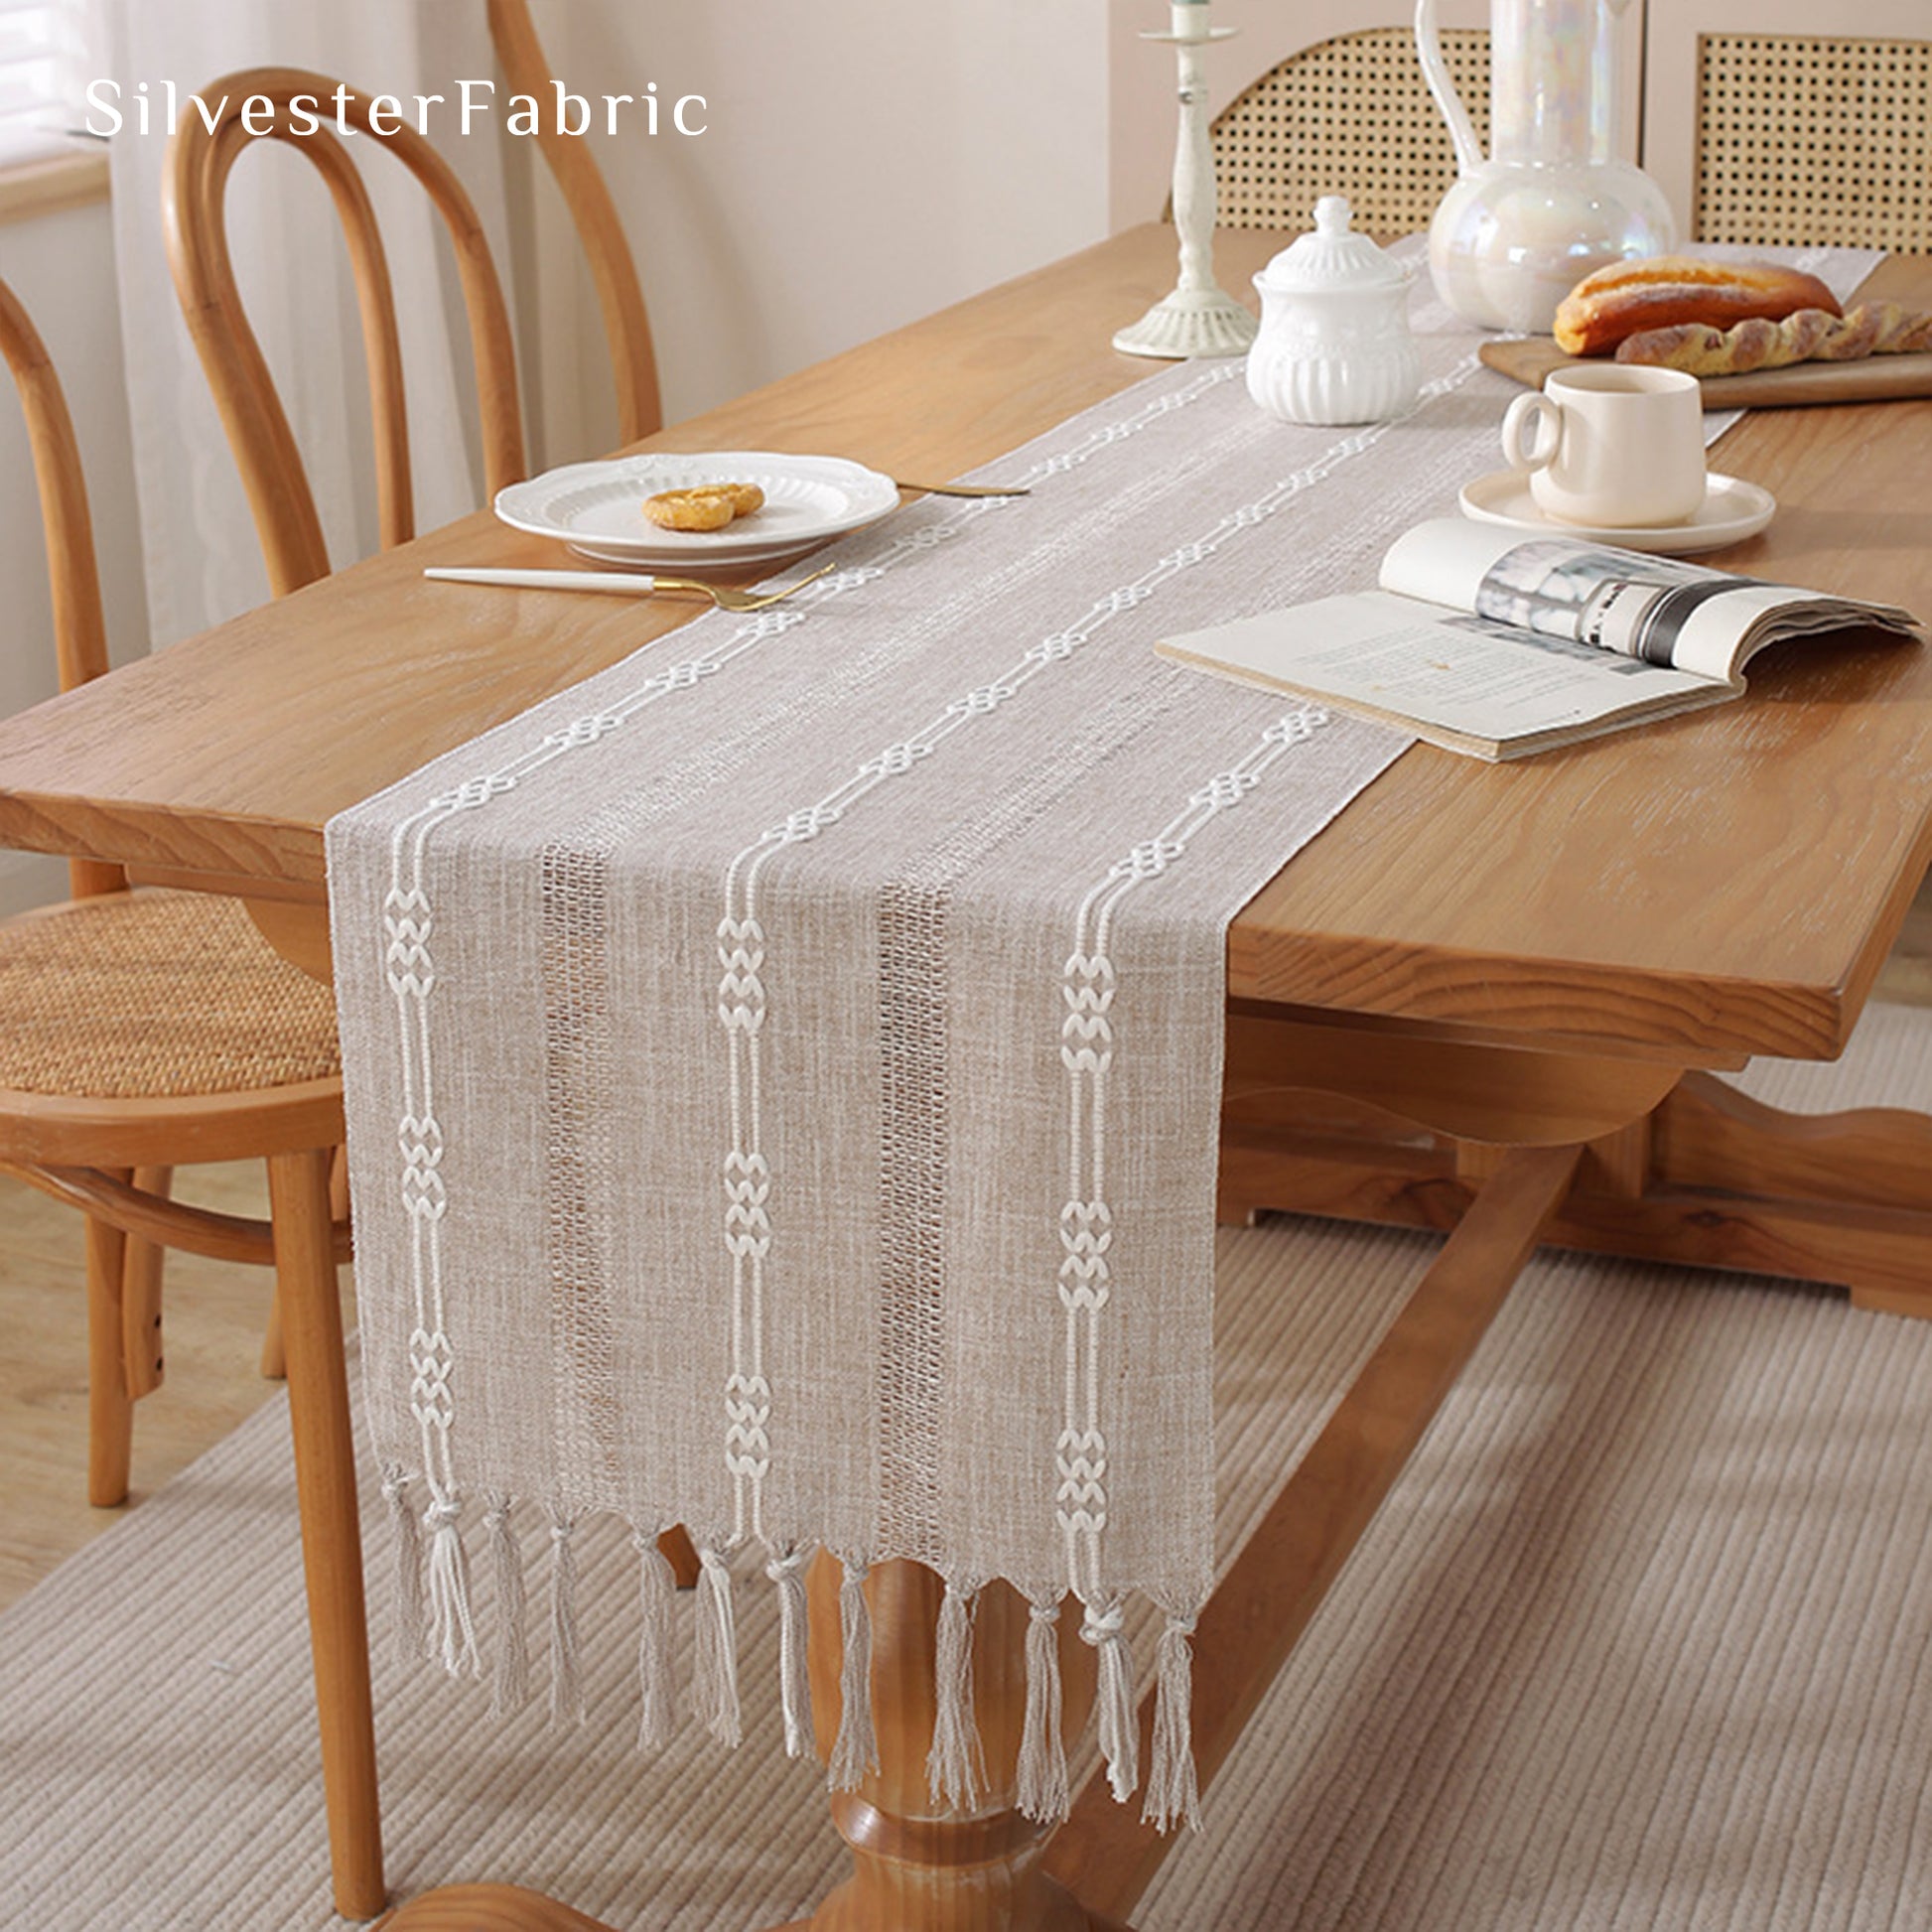 Table Runner丨Coffee Table Runner - Silvester Fabric